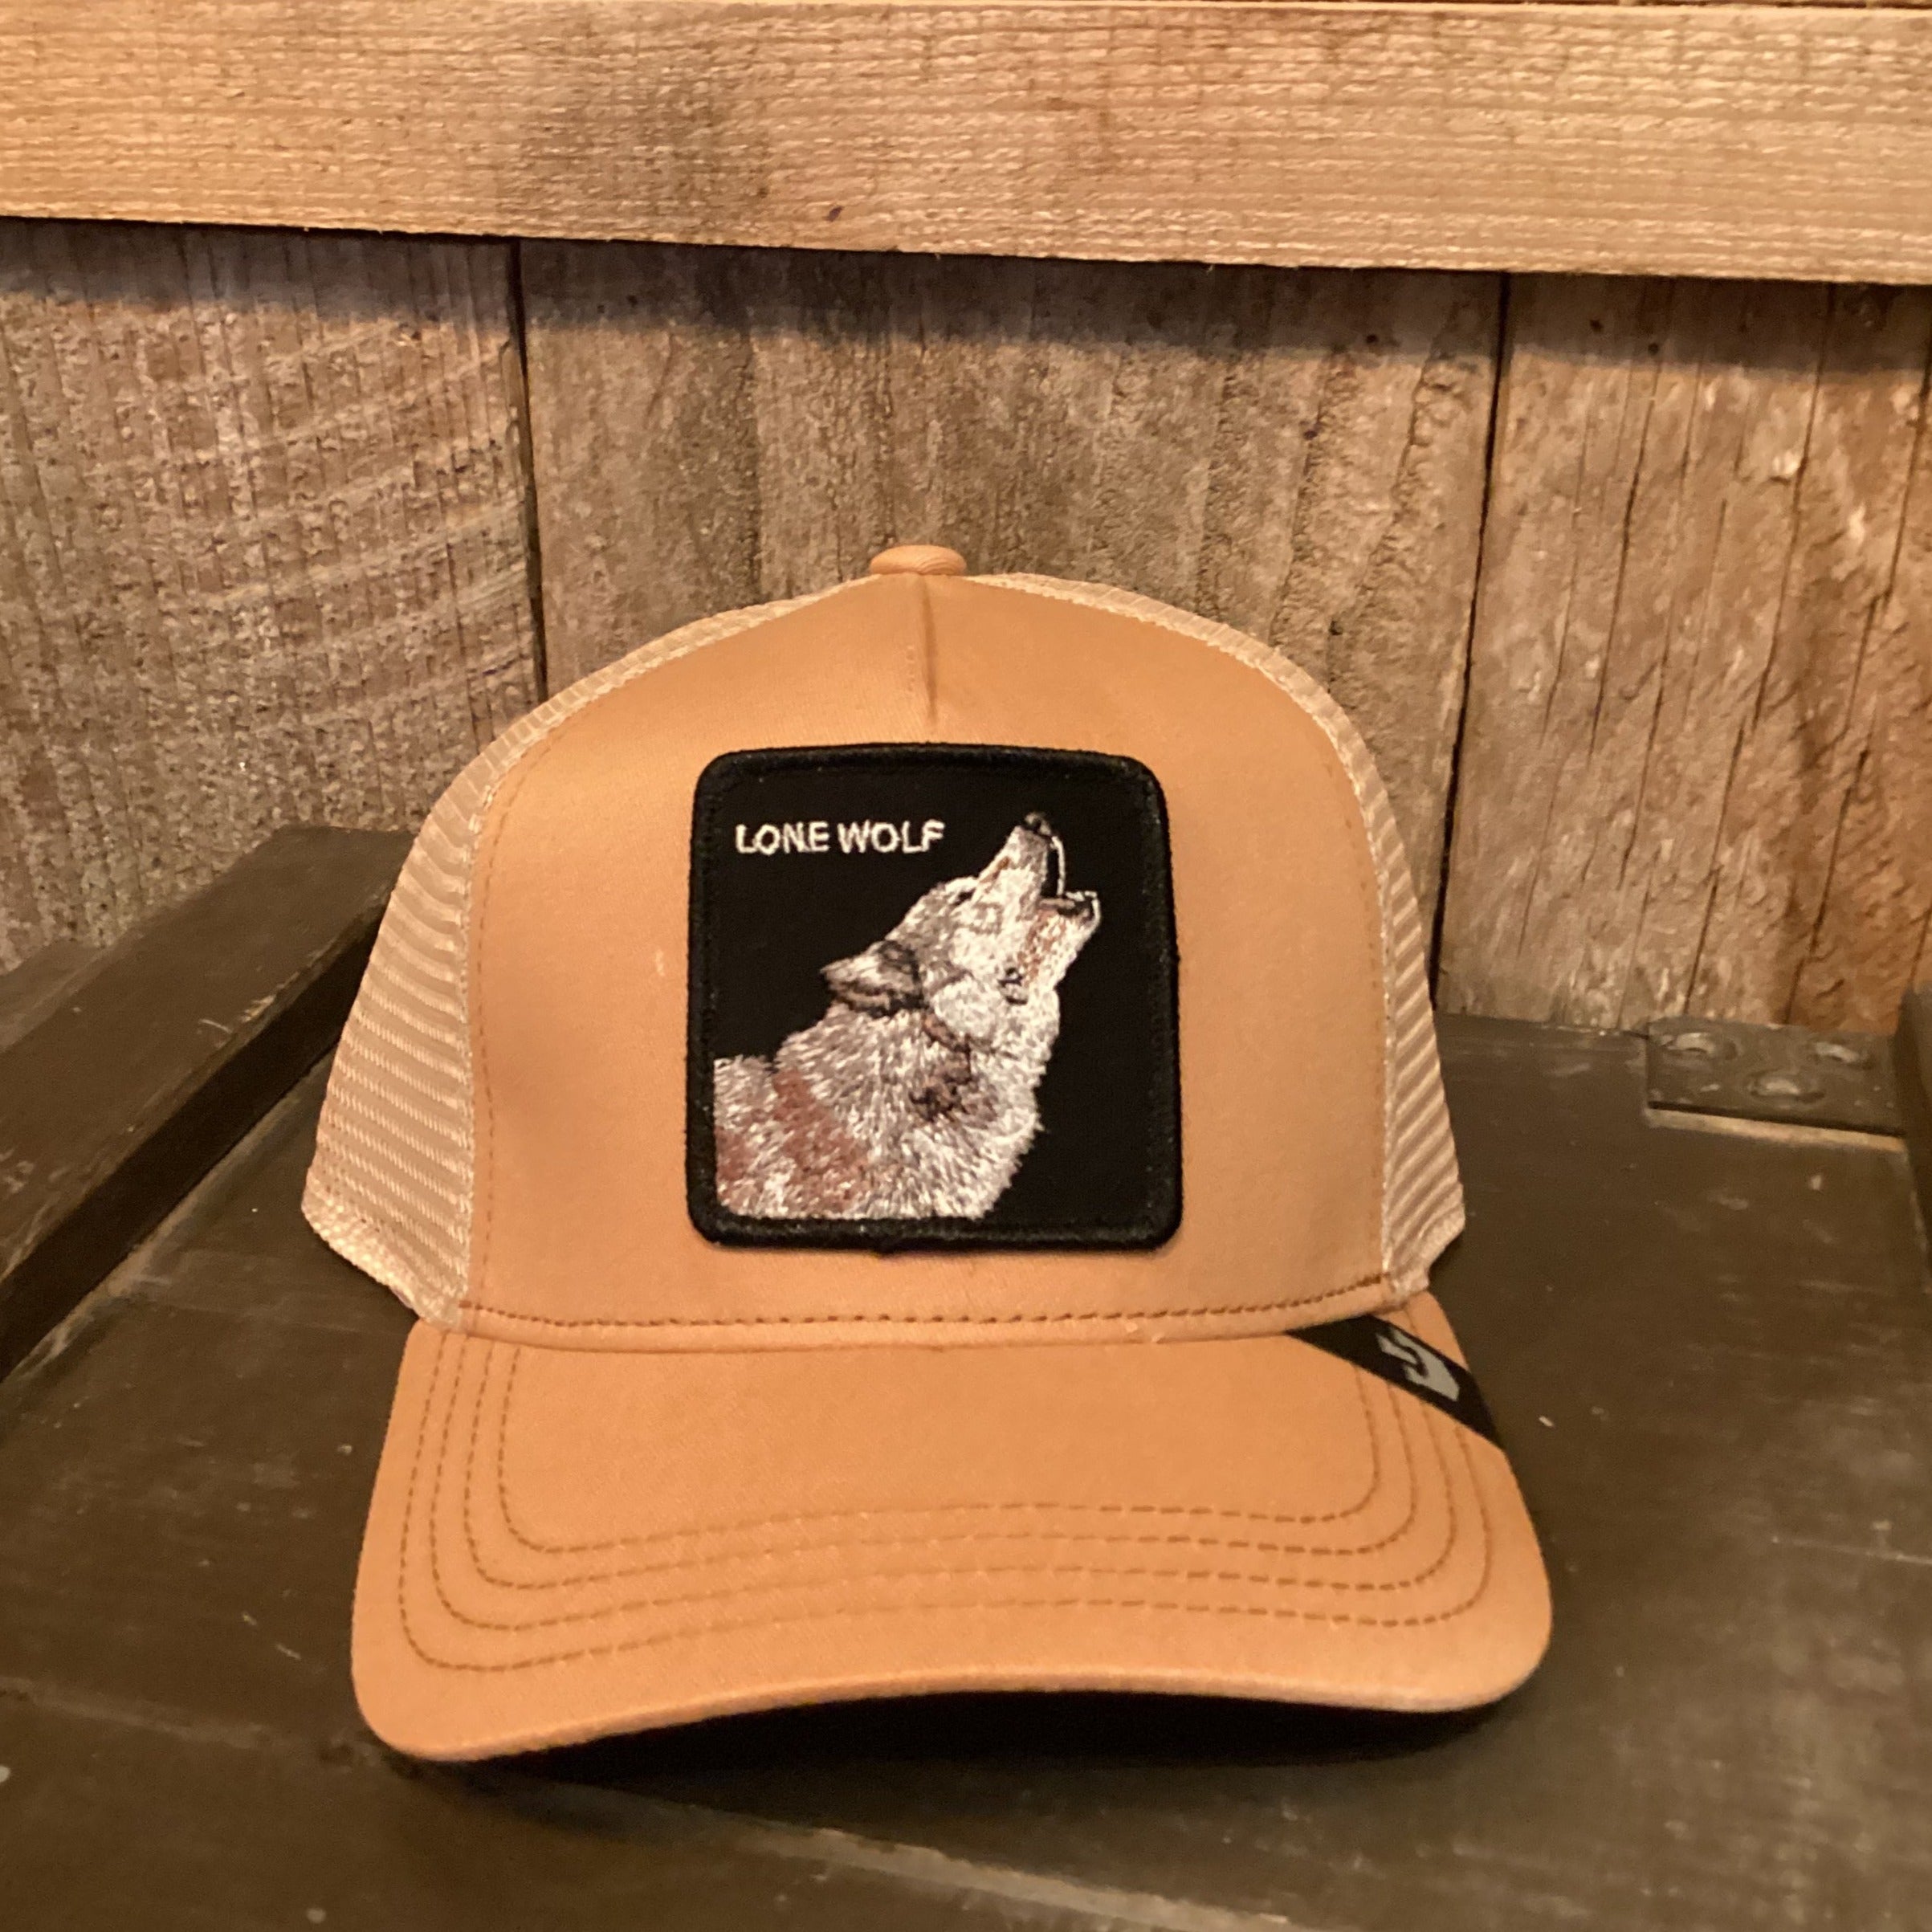 'Goorin Bros. The Lone Wolf Trucker Hat' in 'Mauve' colour